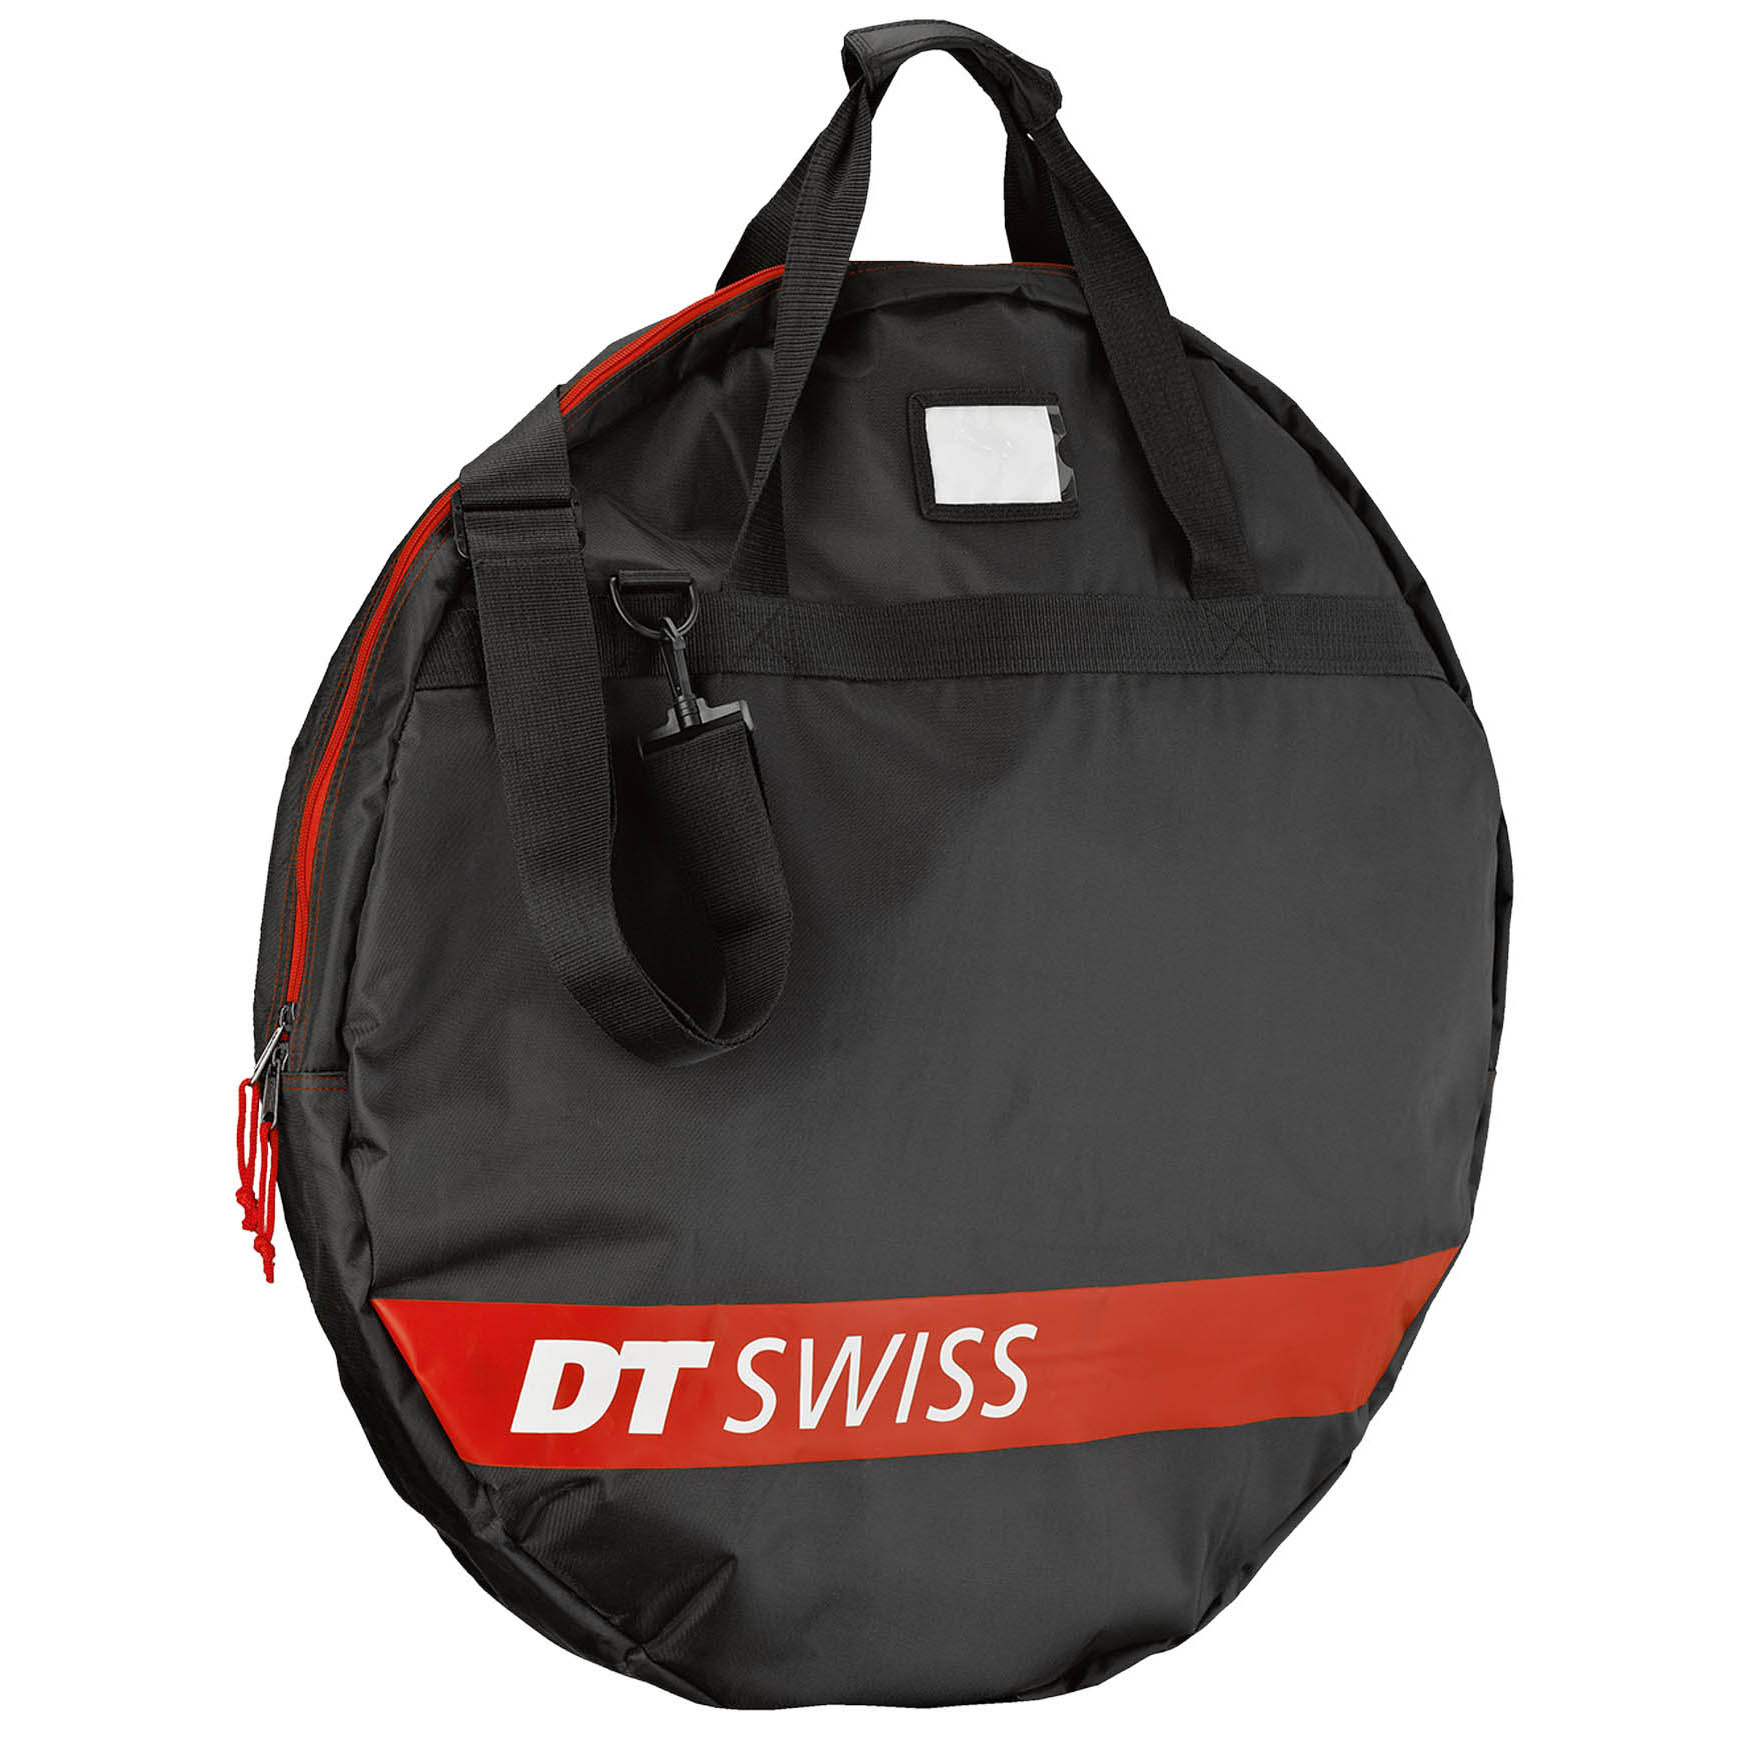 DT Swiss Single Wheel Bag, Black/Red